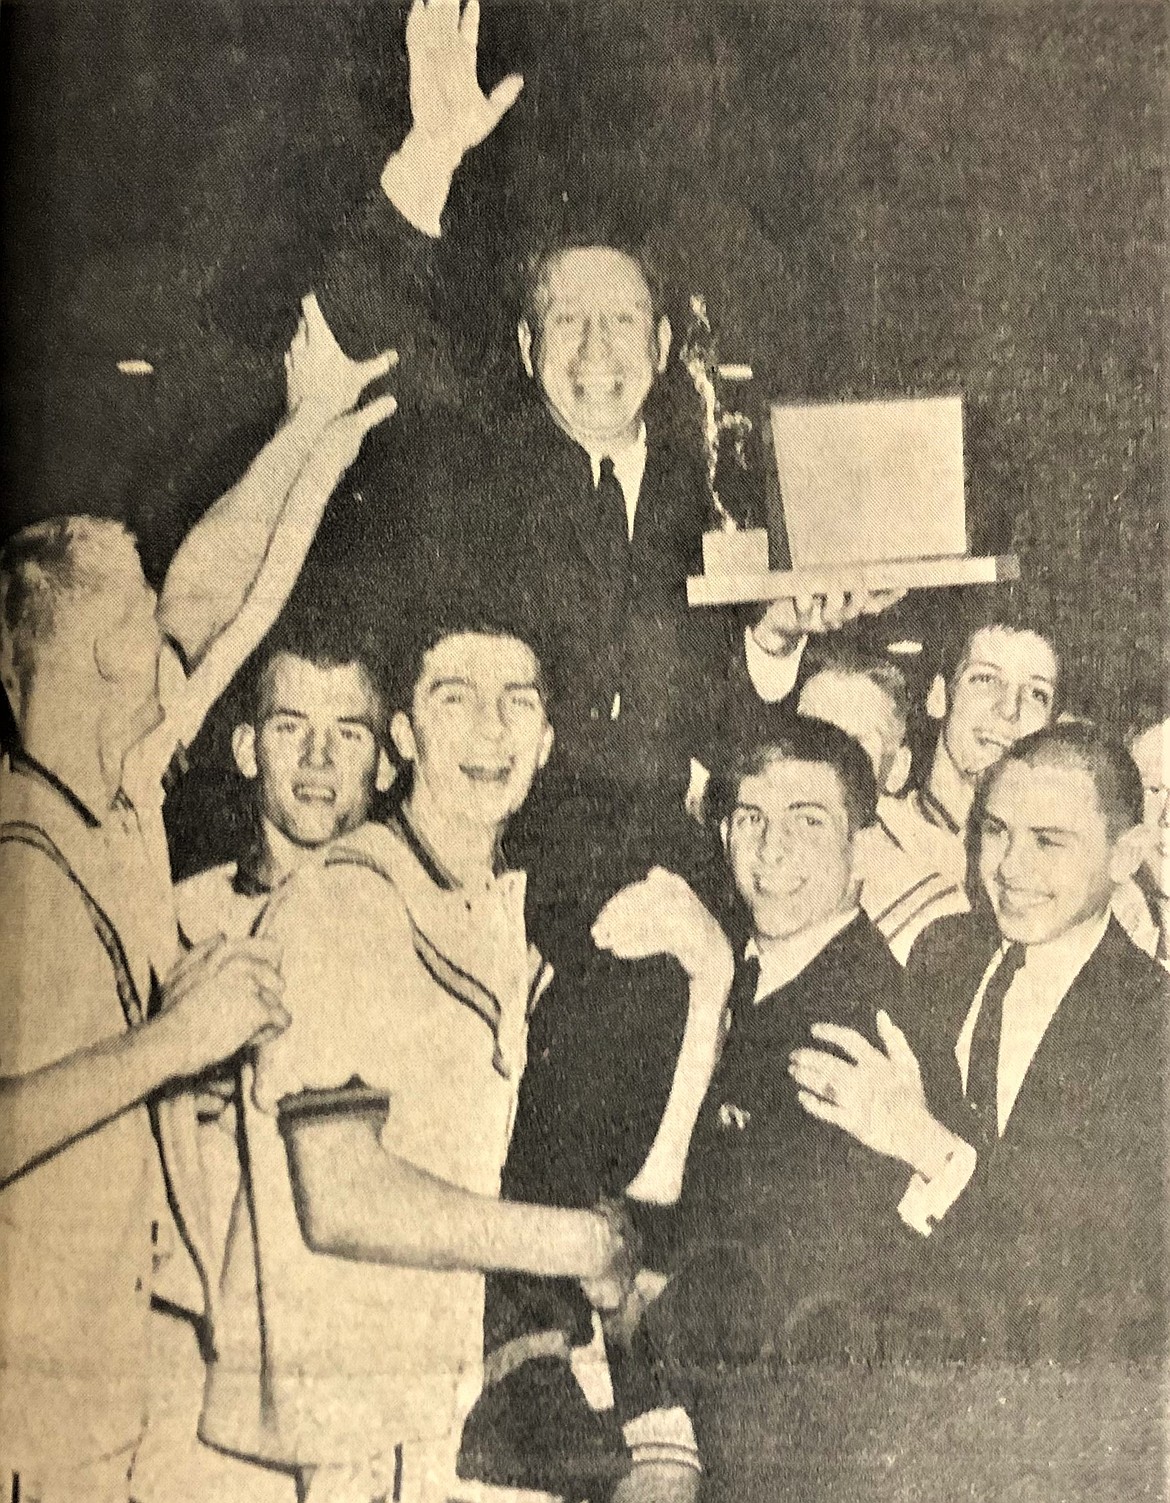 Coach Elmer Jordan and Vik players celebrate 1963 state title.